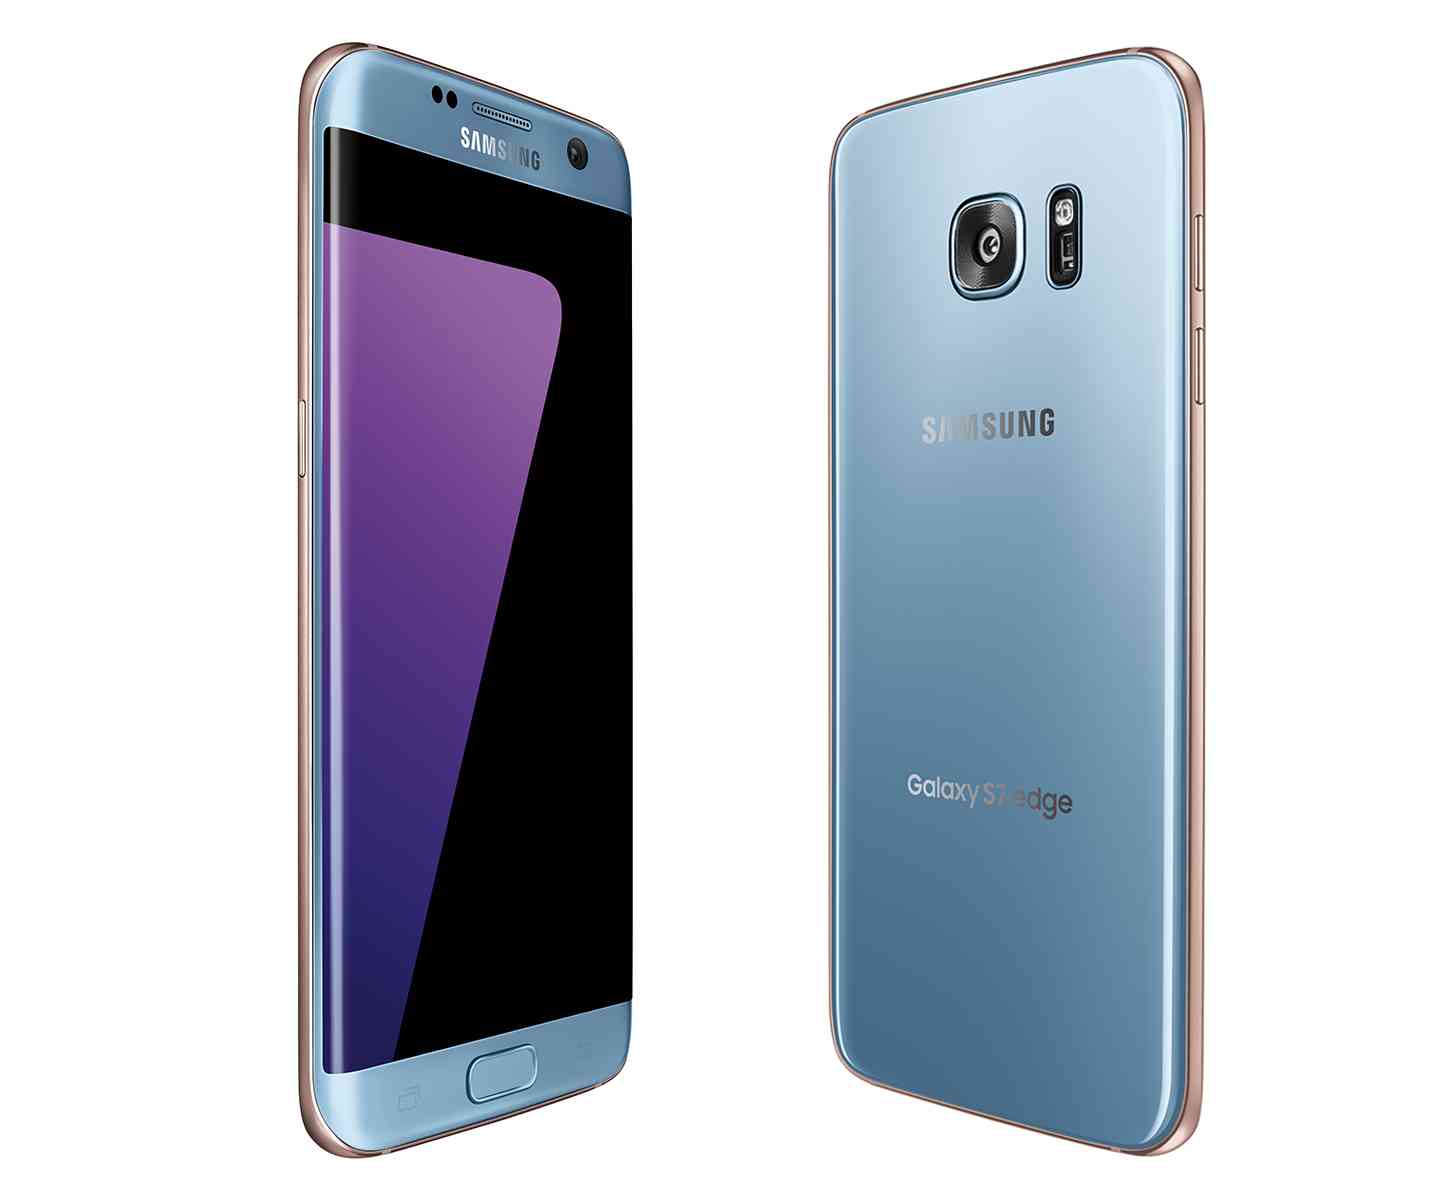 Blue Coral Samsung Galaxy S7 edge official